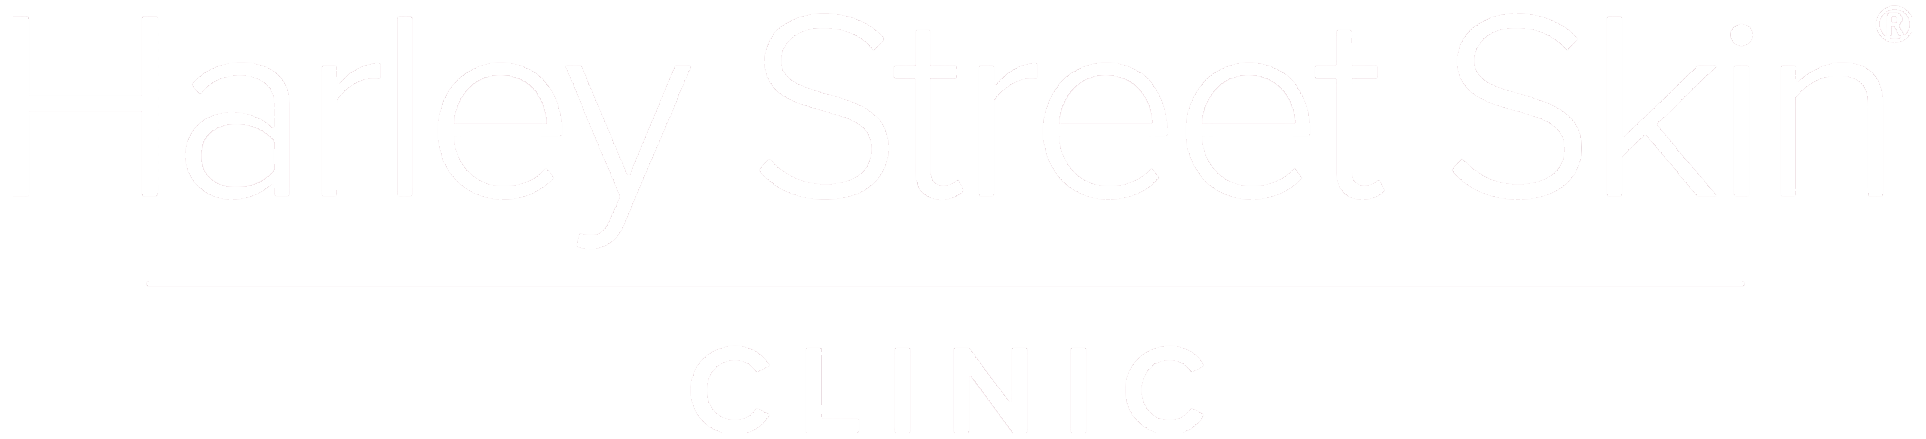 harley street skin clinic logo